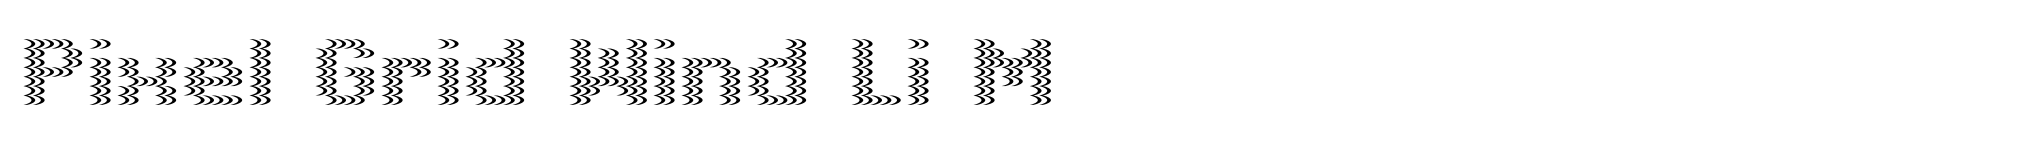 Pixel Grid Wind Li M image